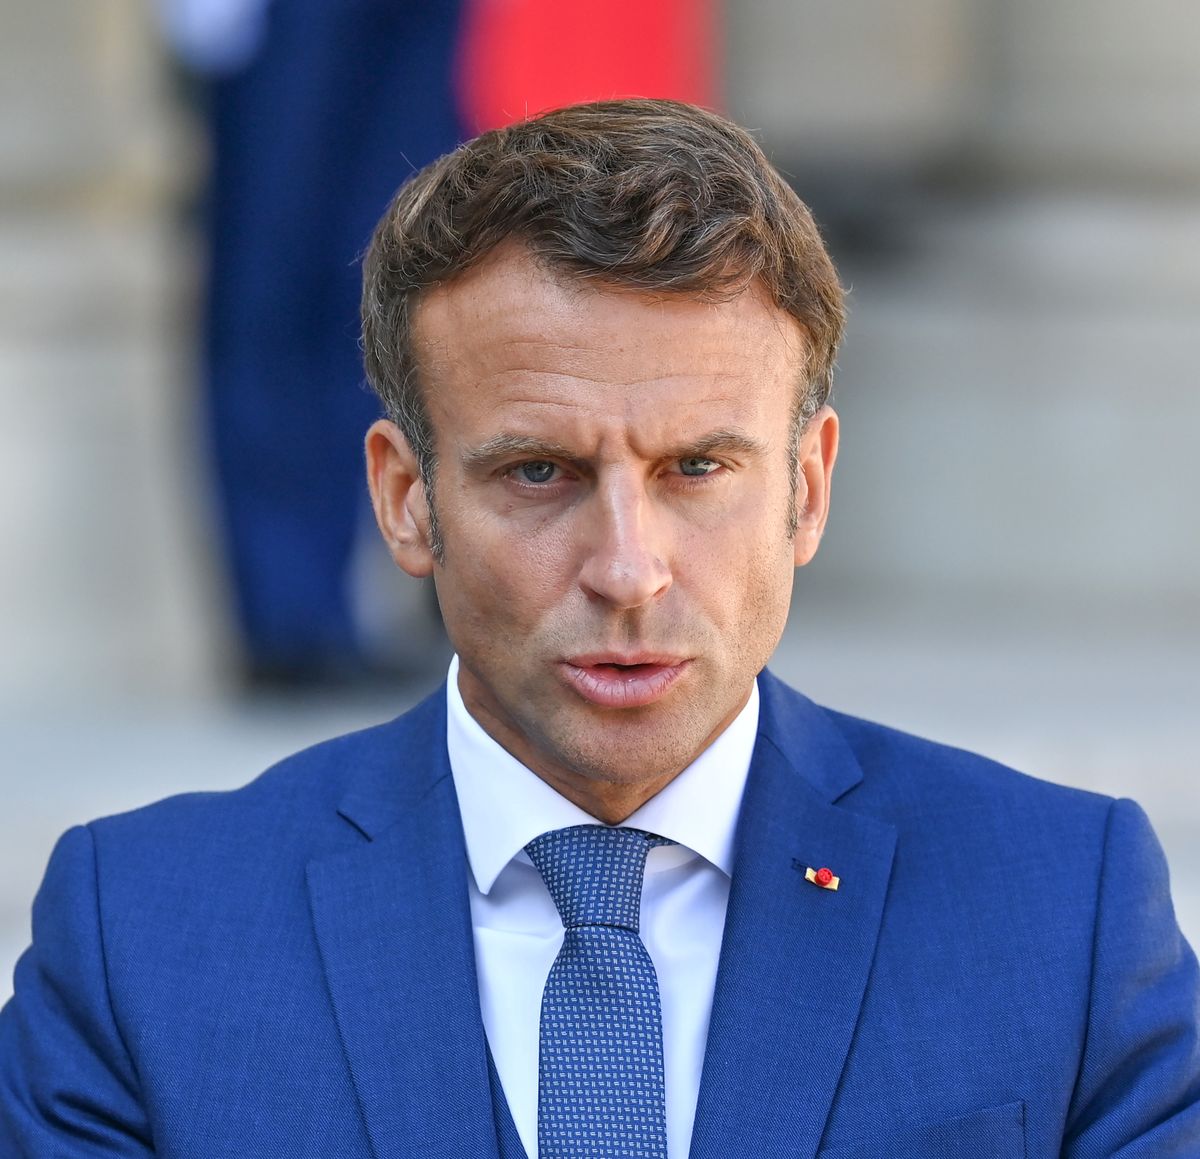 Emmanuel Macron (Photo by Mustafa Yalcin/Anadolu Agency via Getty Images)